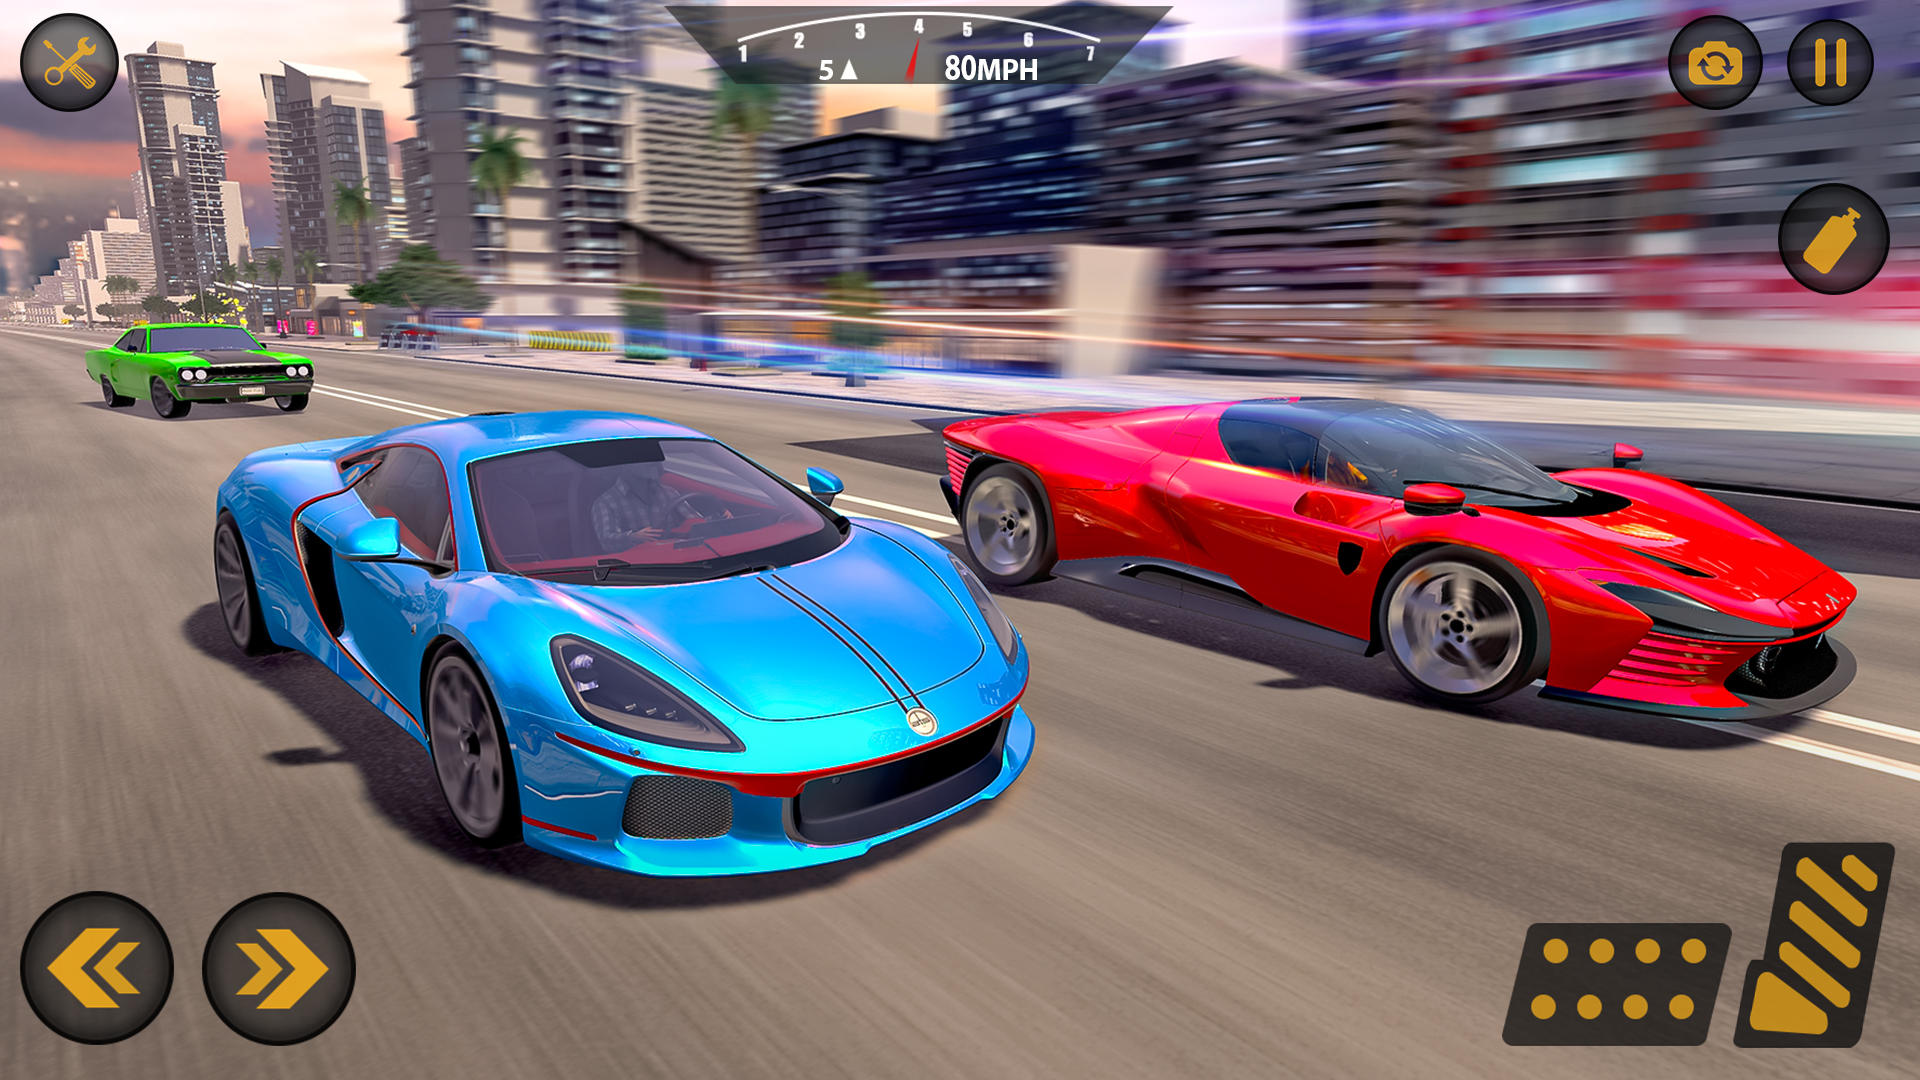 Screenshot 1 of चरम रेस कार ड्राइविंग गेम्स 5.0